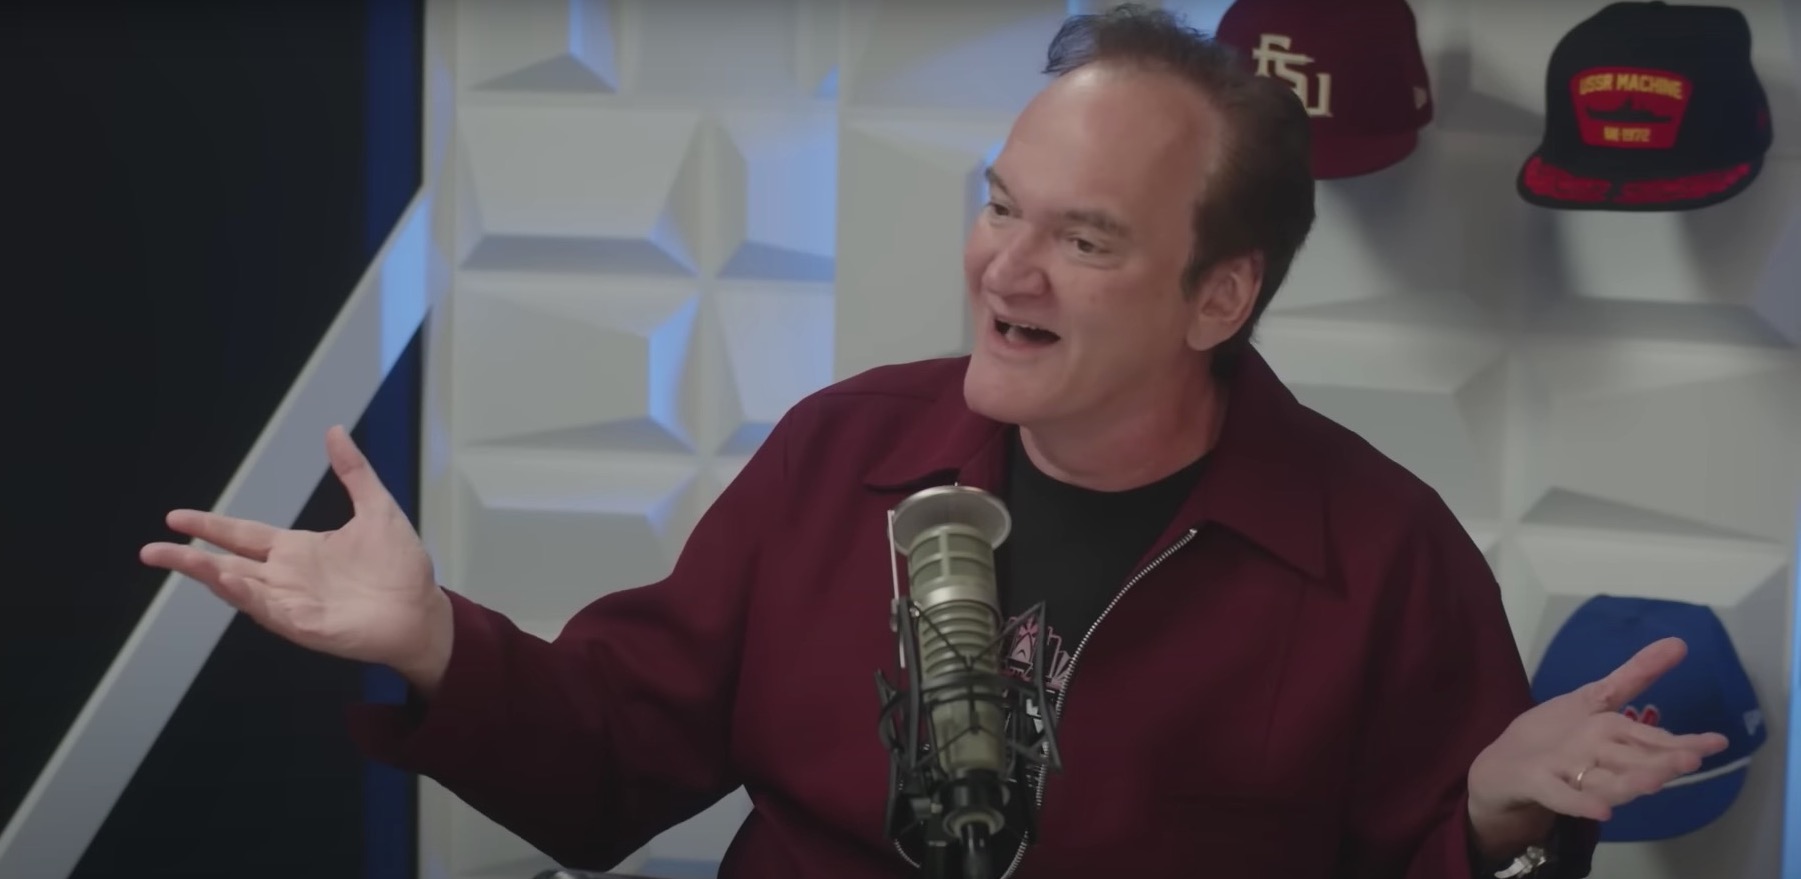 Quentin Tarantino: director’s latest film revealed